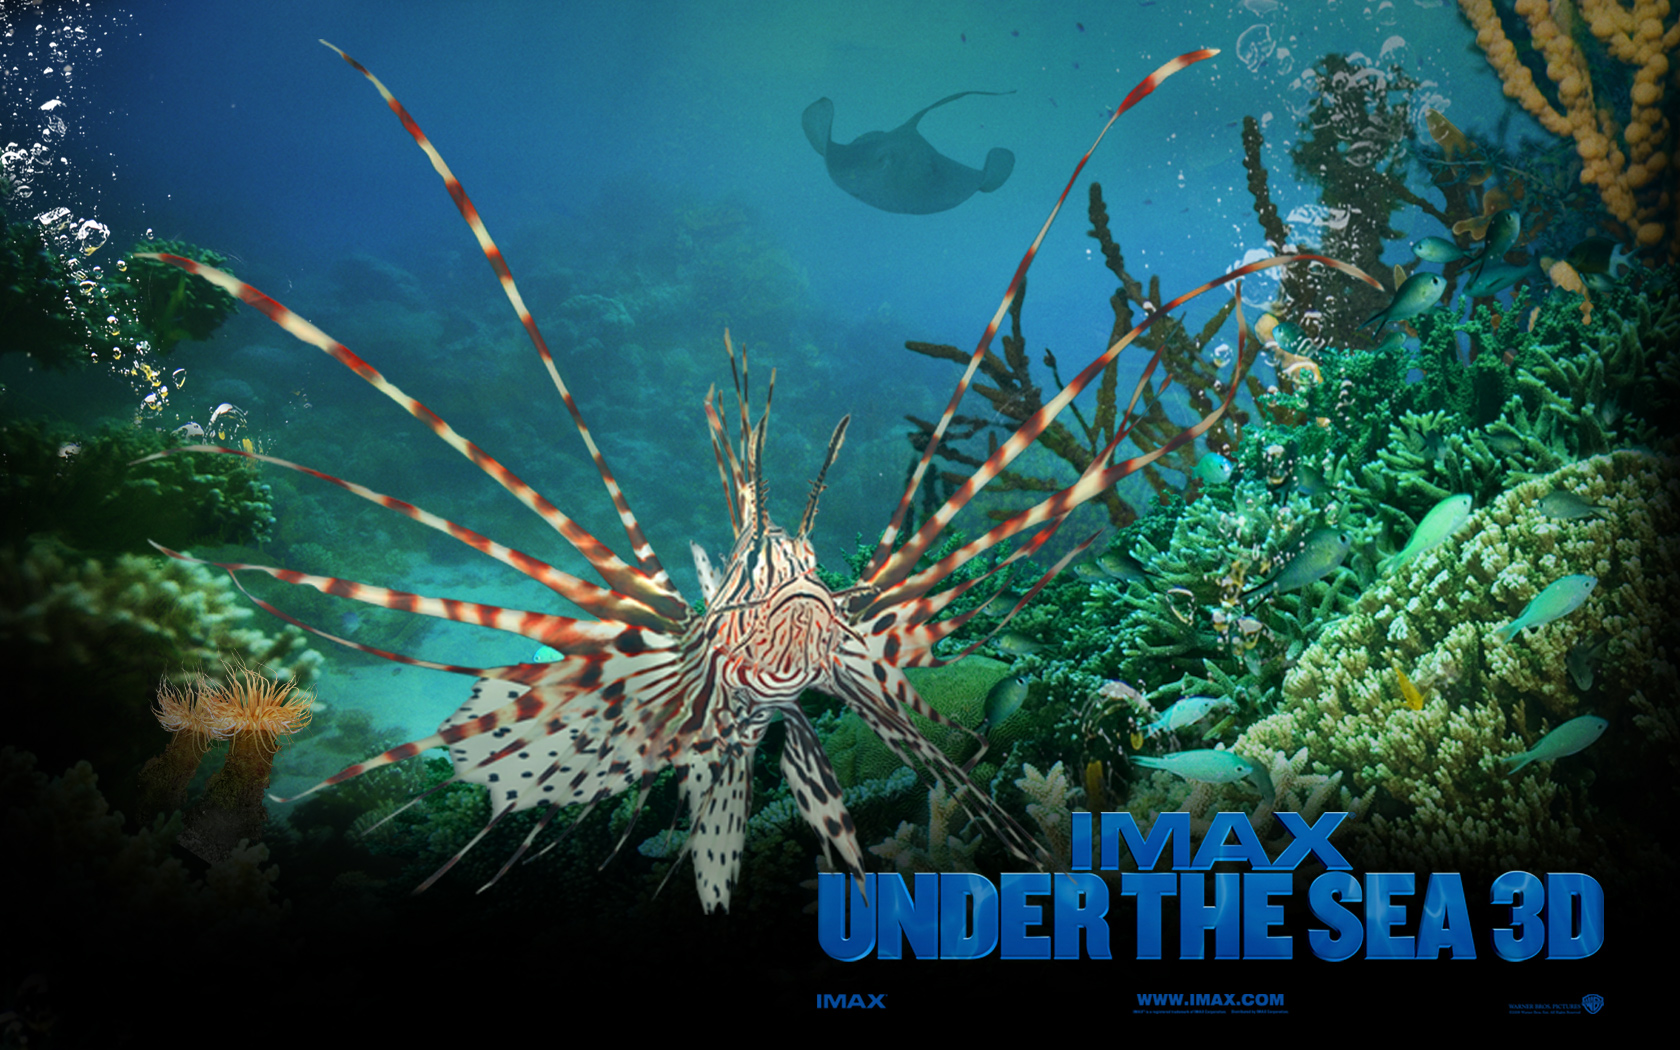 Alayx WAllpaper Under The Sea